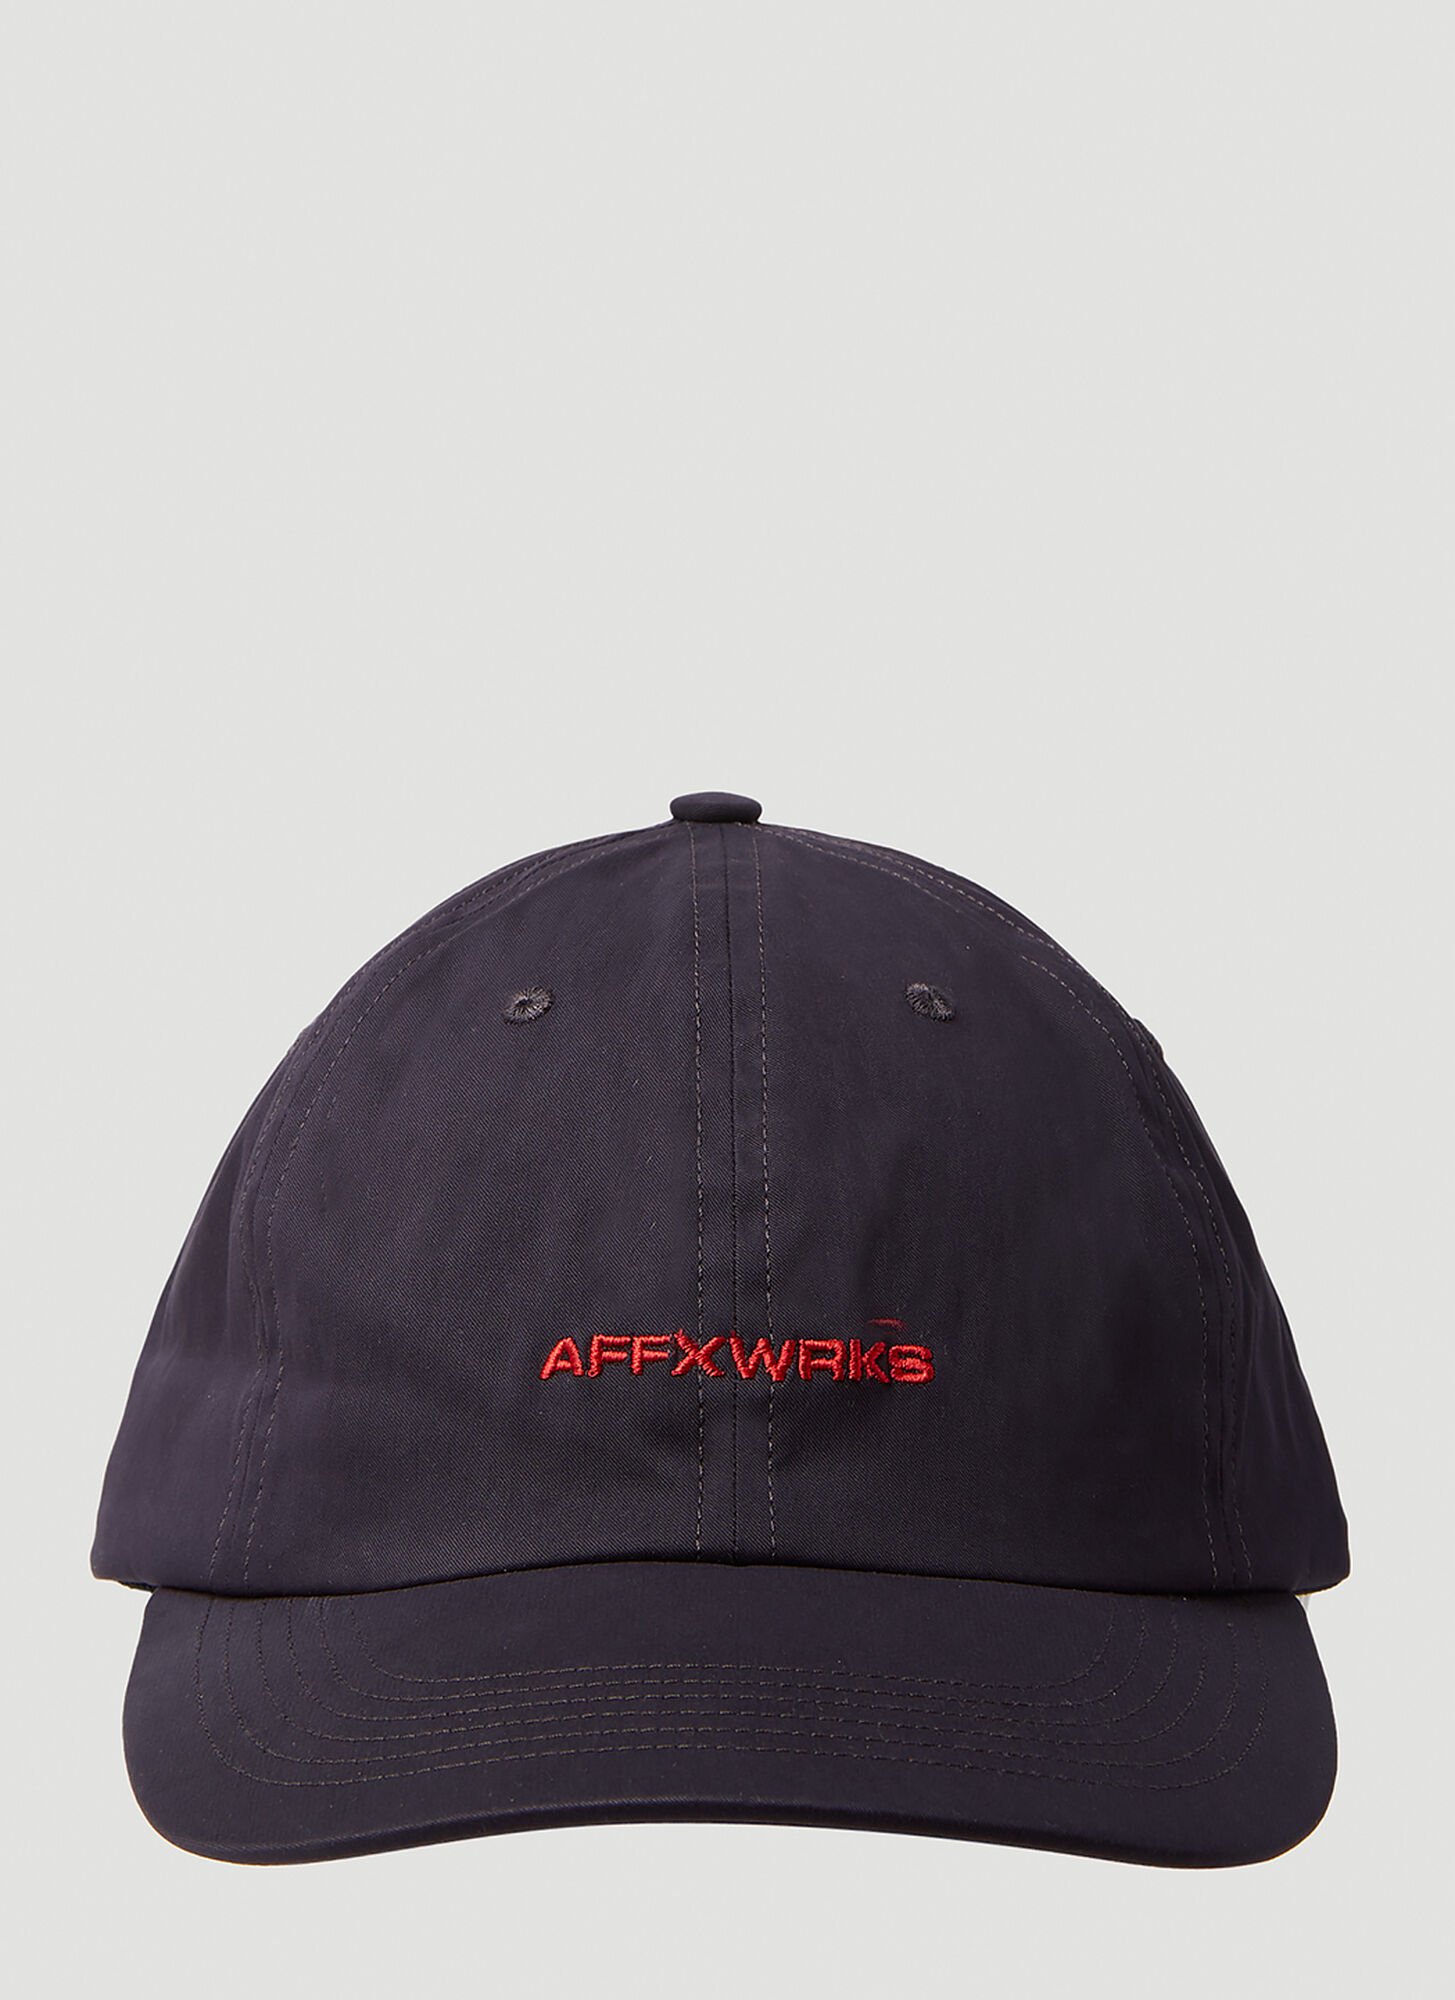 Affxwrks Logo Embroidery Baseball Cap Male Black